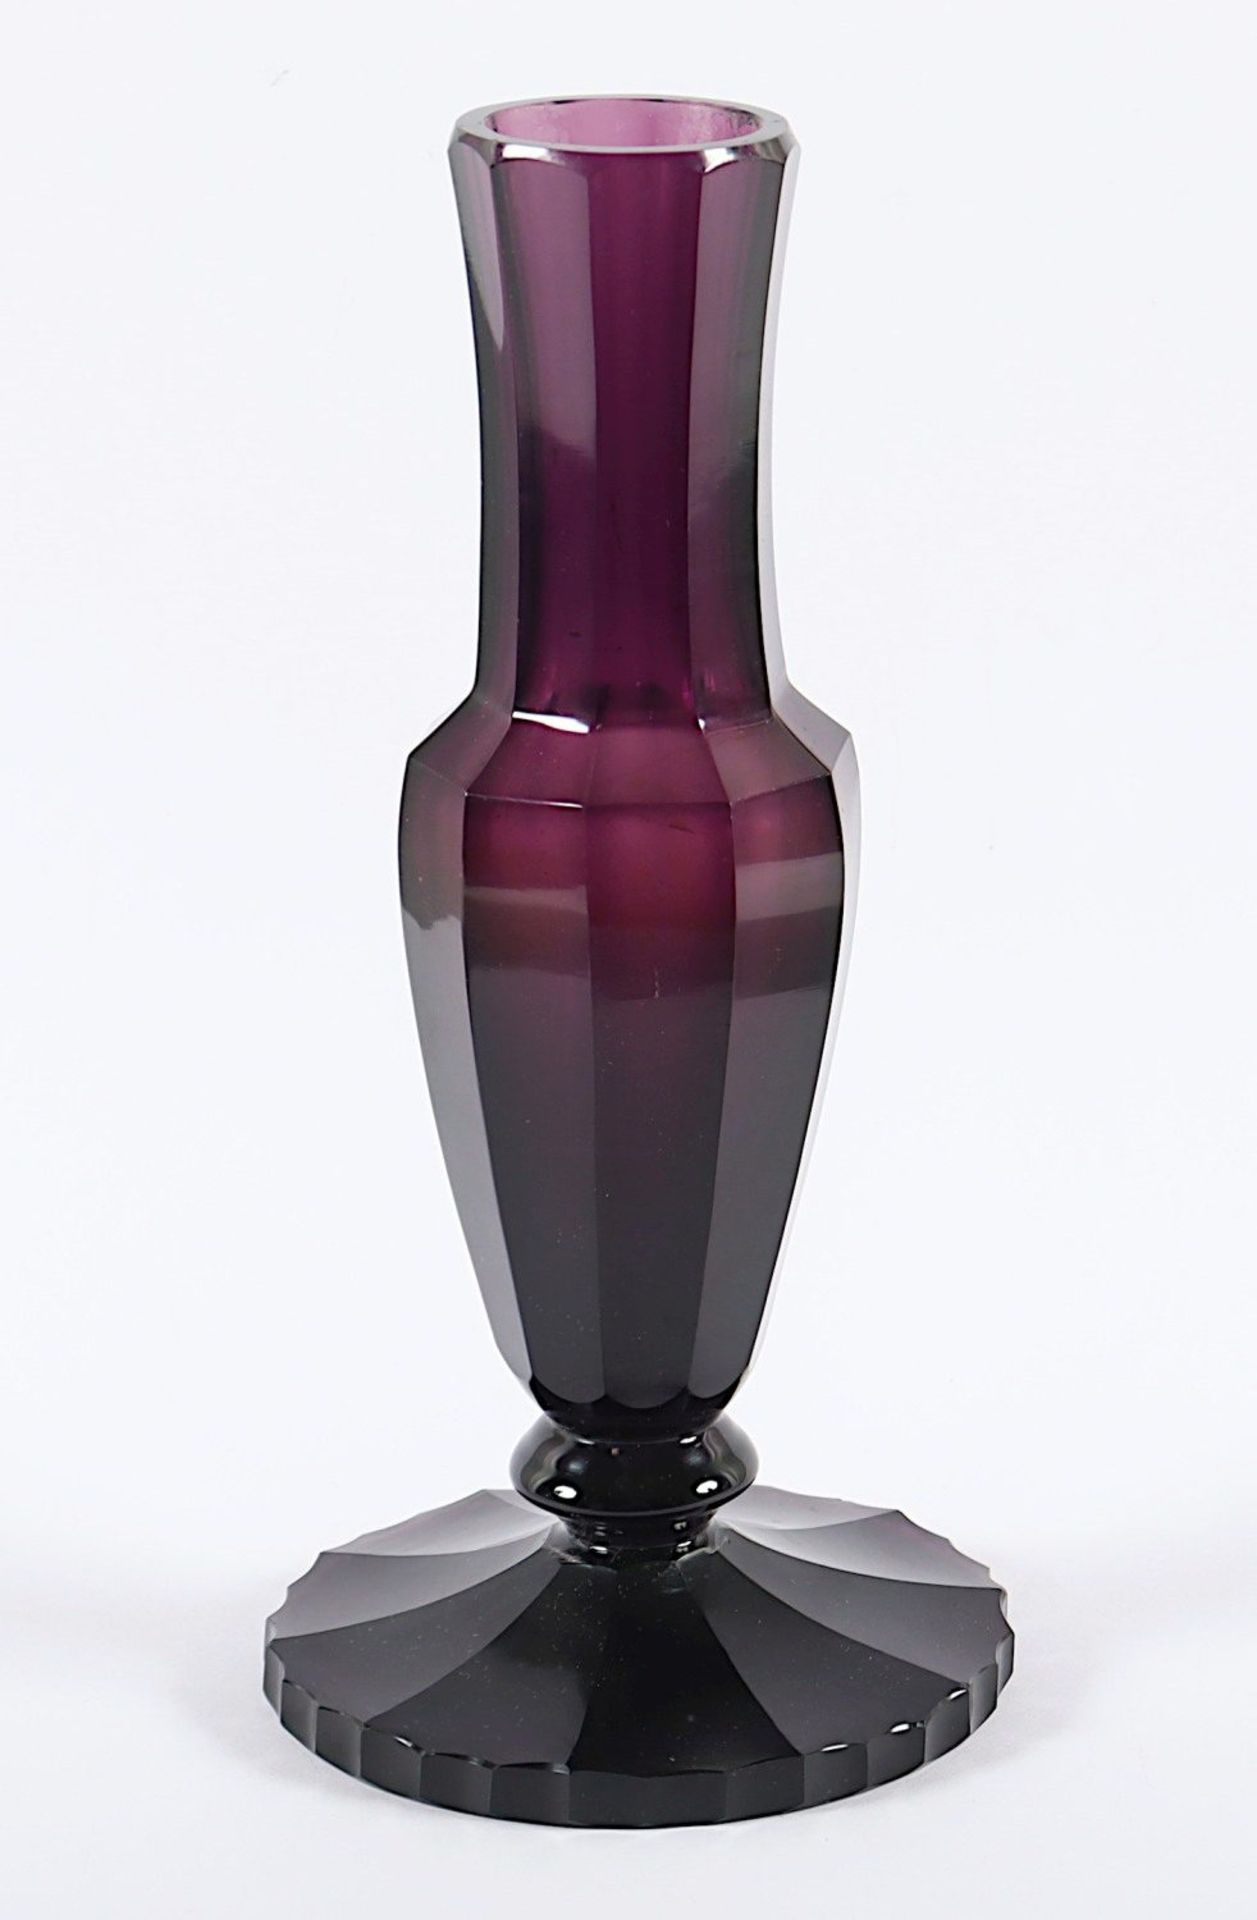 VASE, violett getöntes Glas, Flächenschliff, min.best., H 24, MOSER, KARLSBAD, um 1920